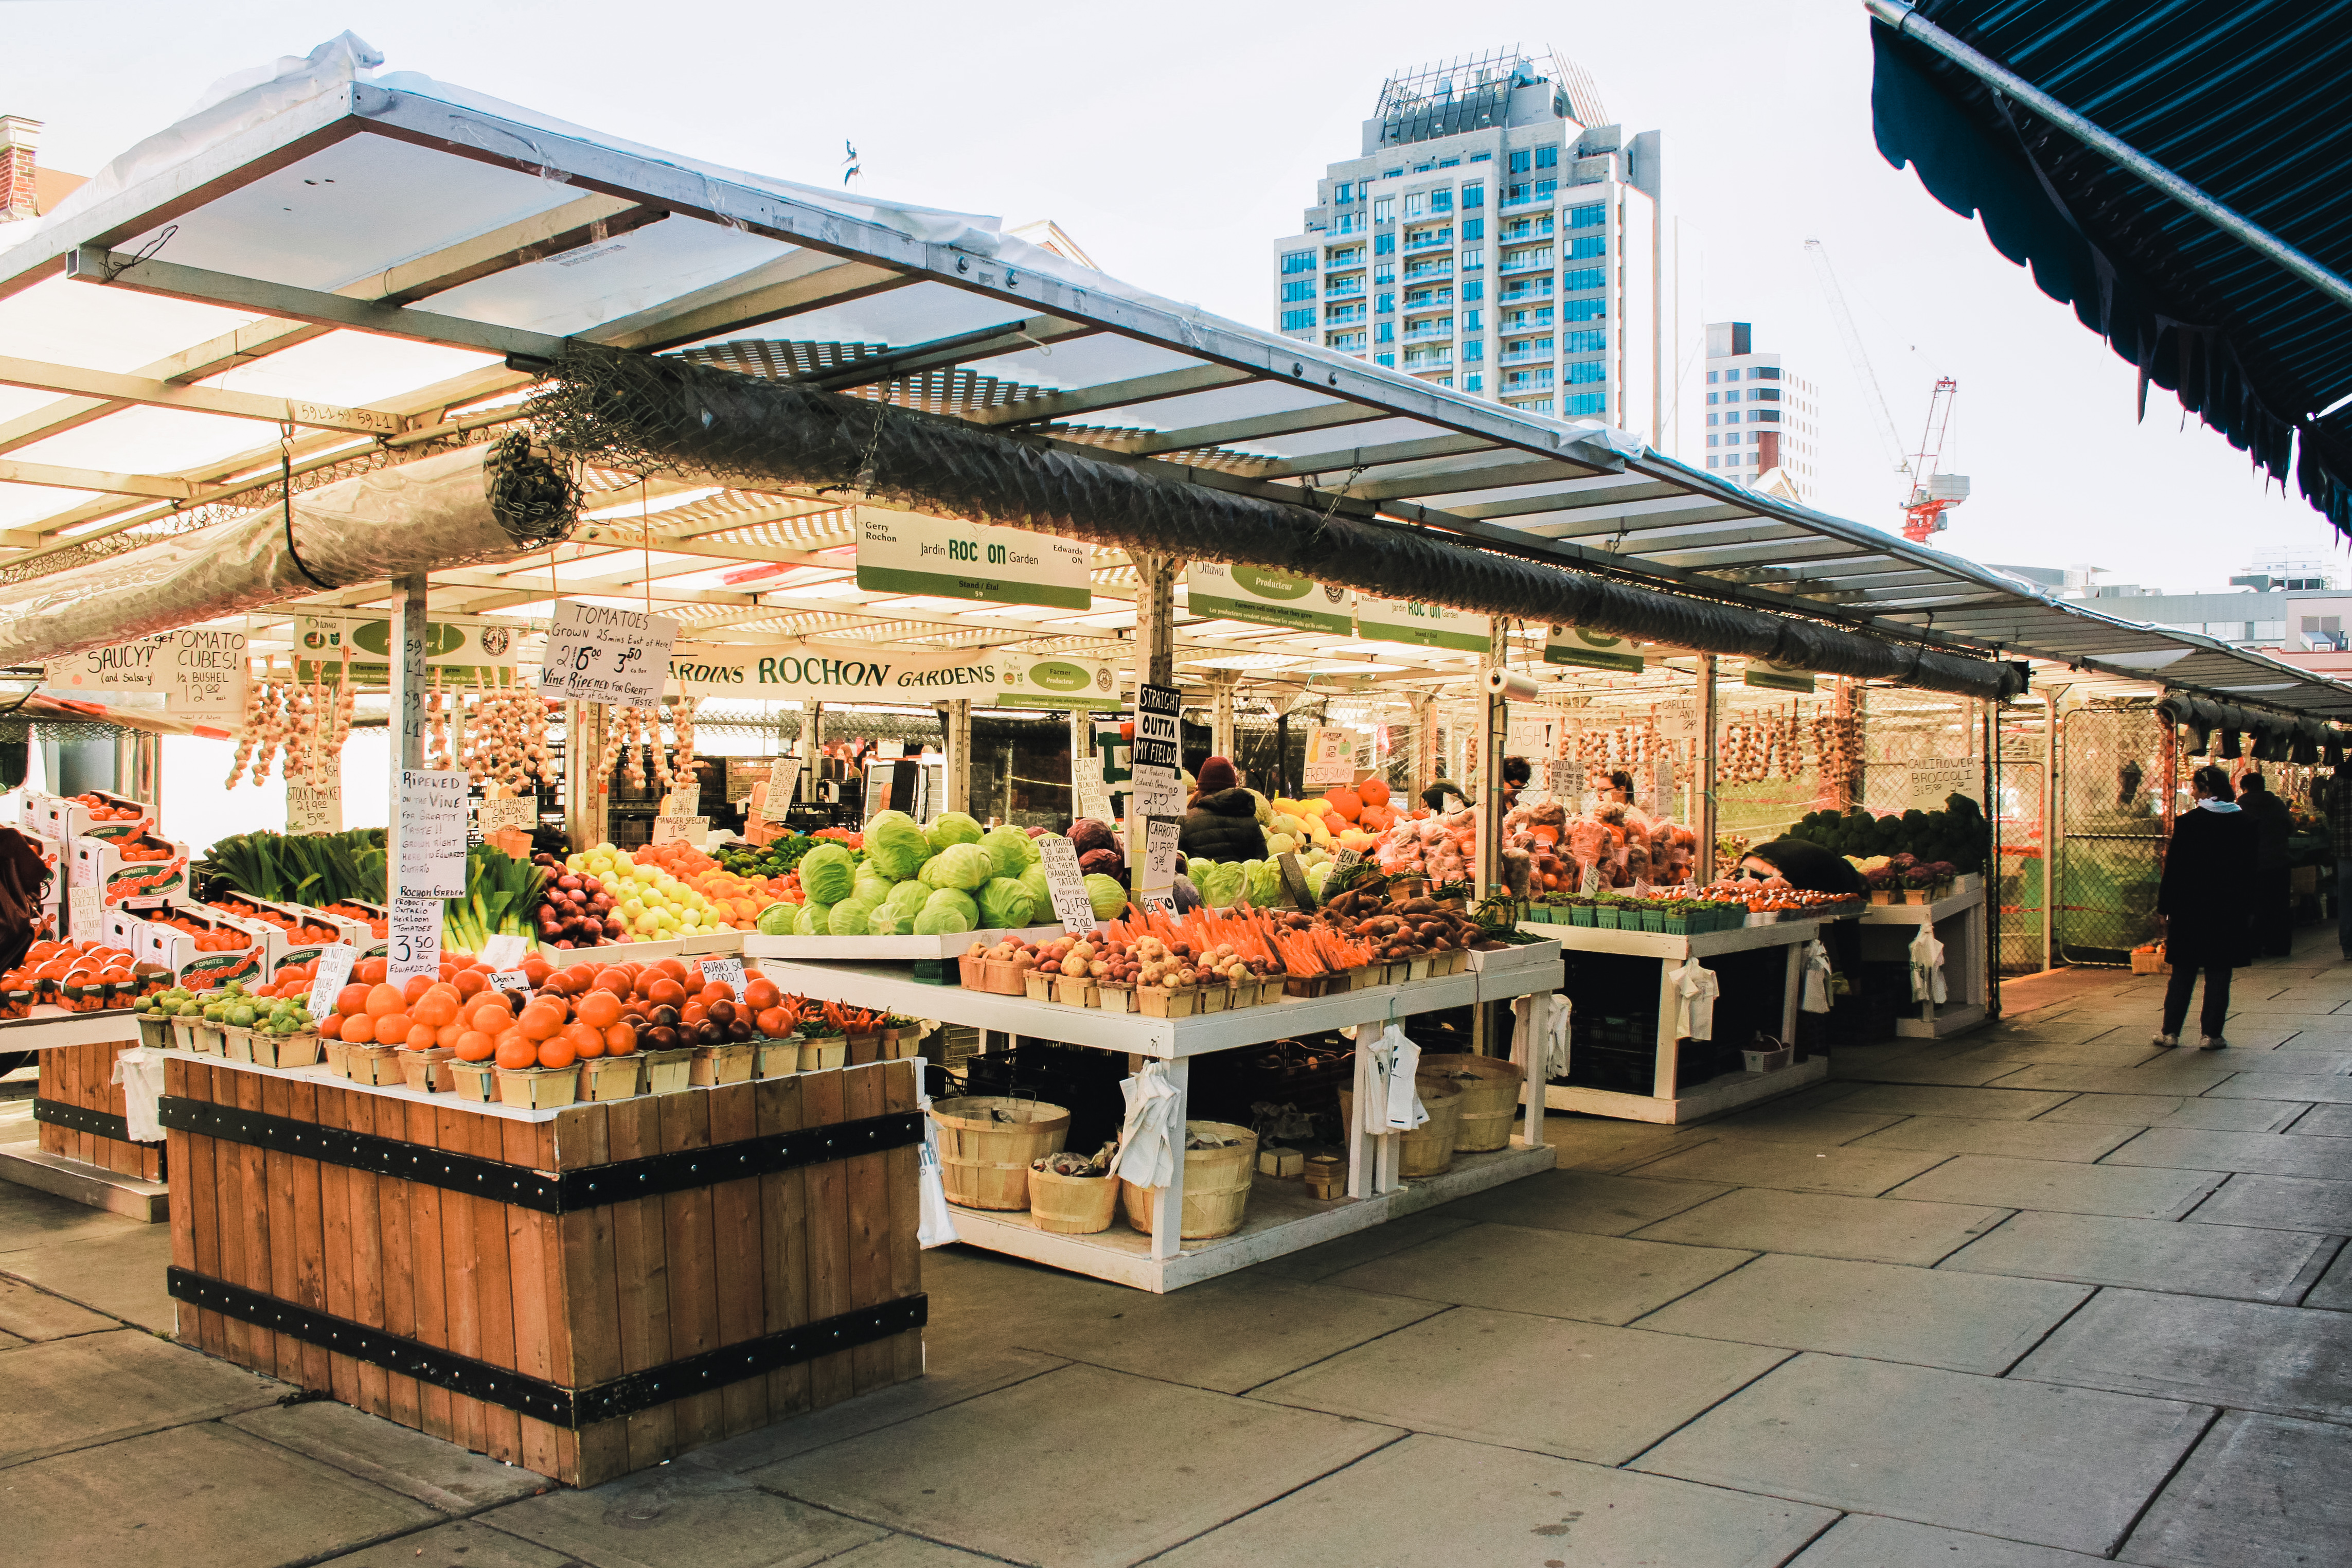 Byward Market Fruits and Vegetables